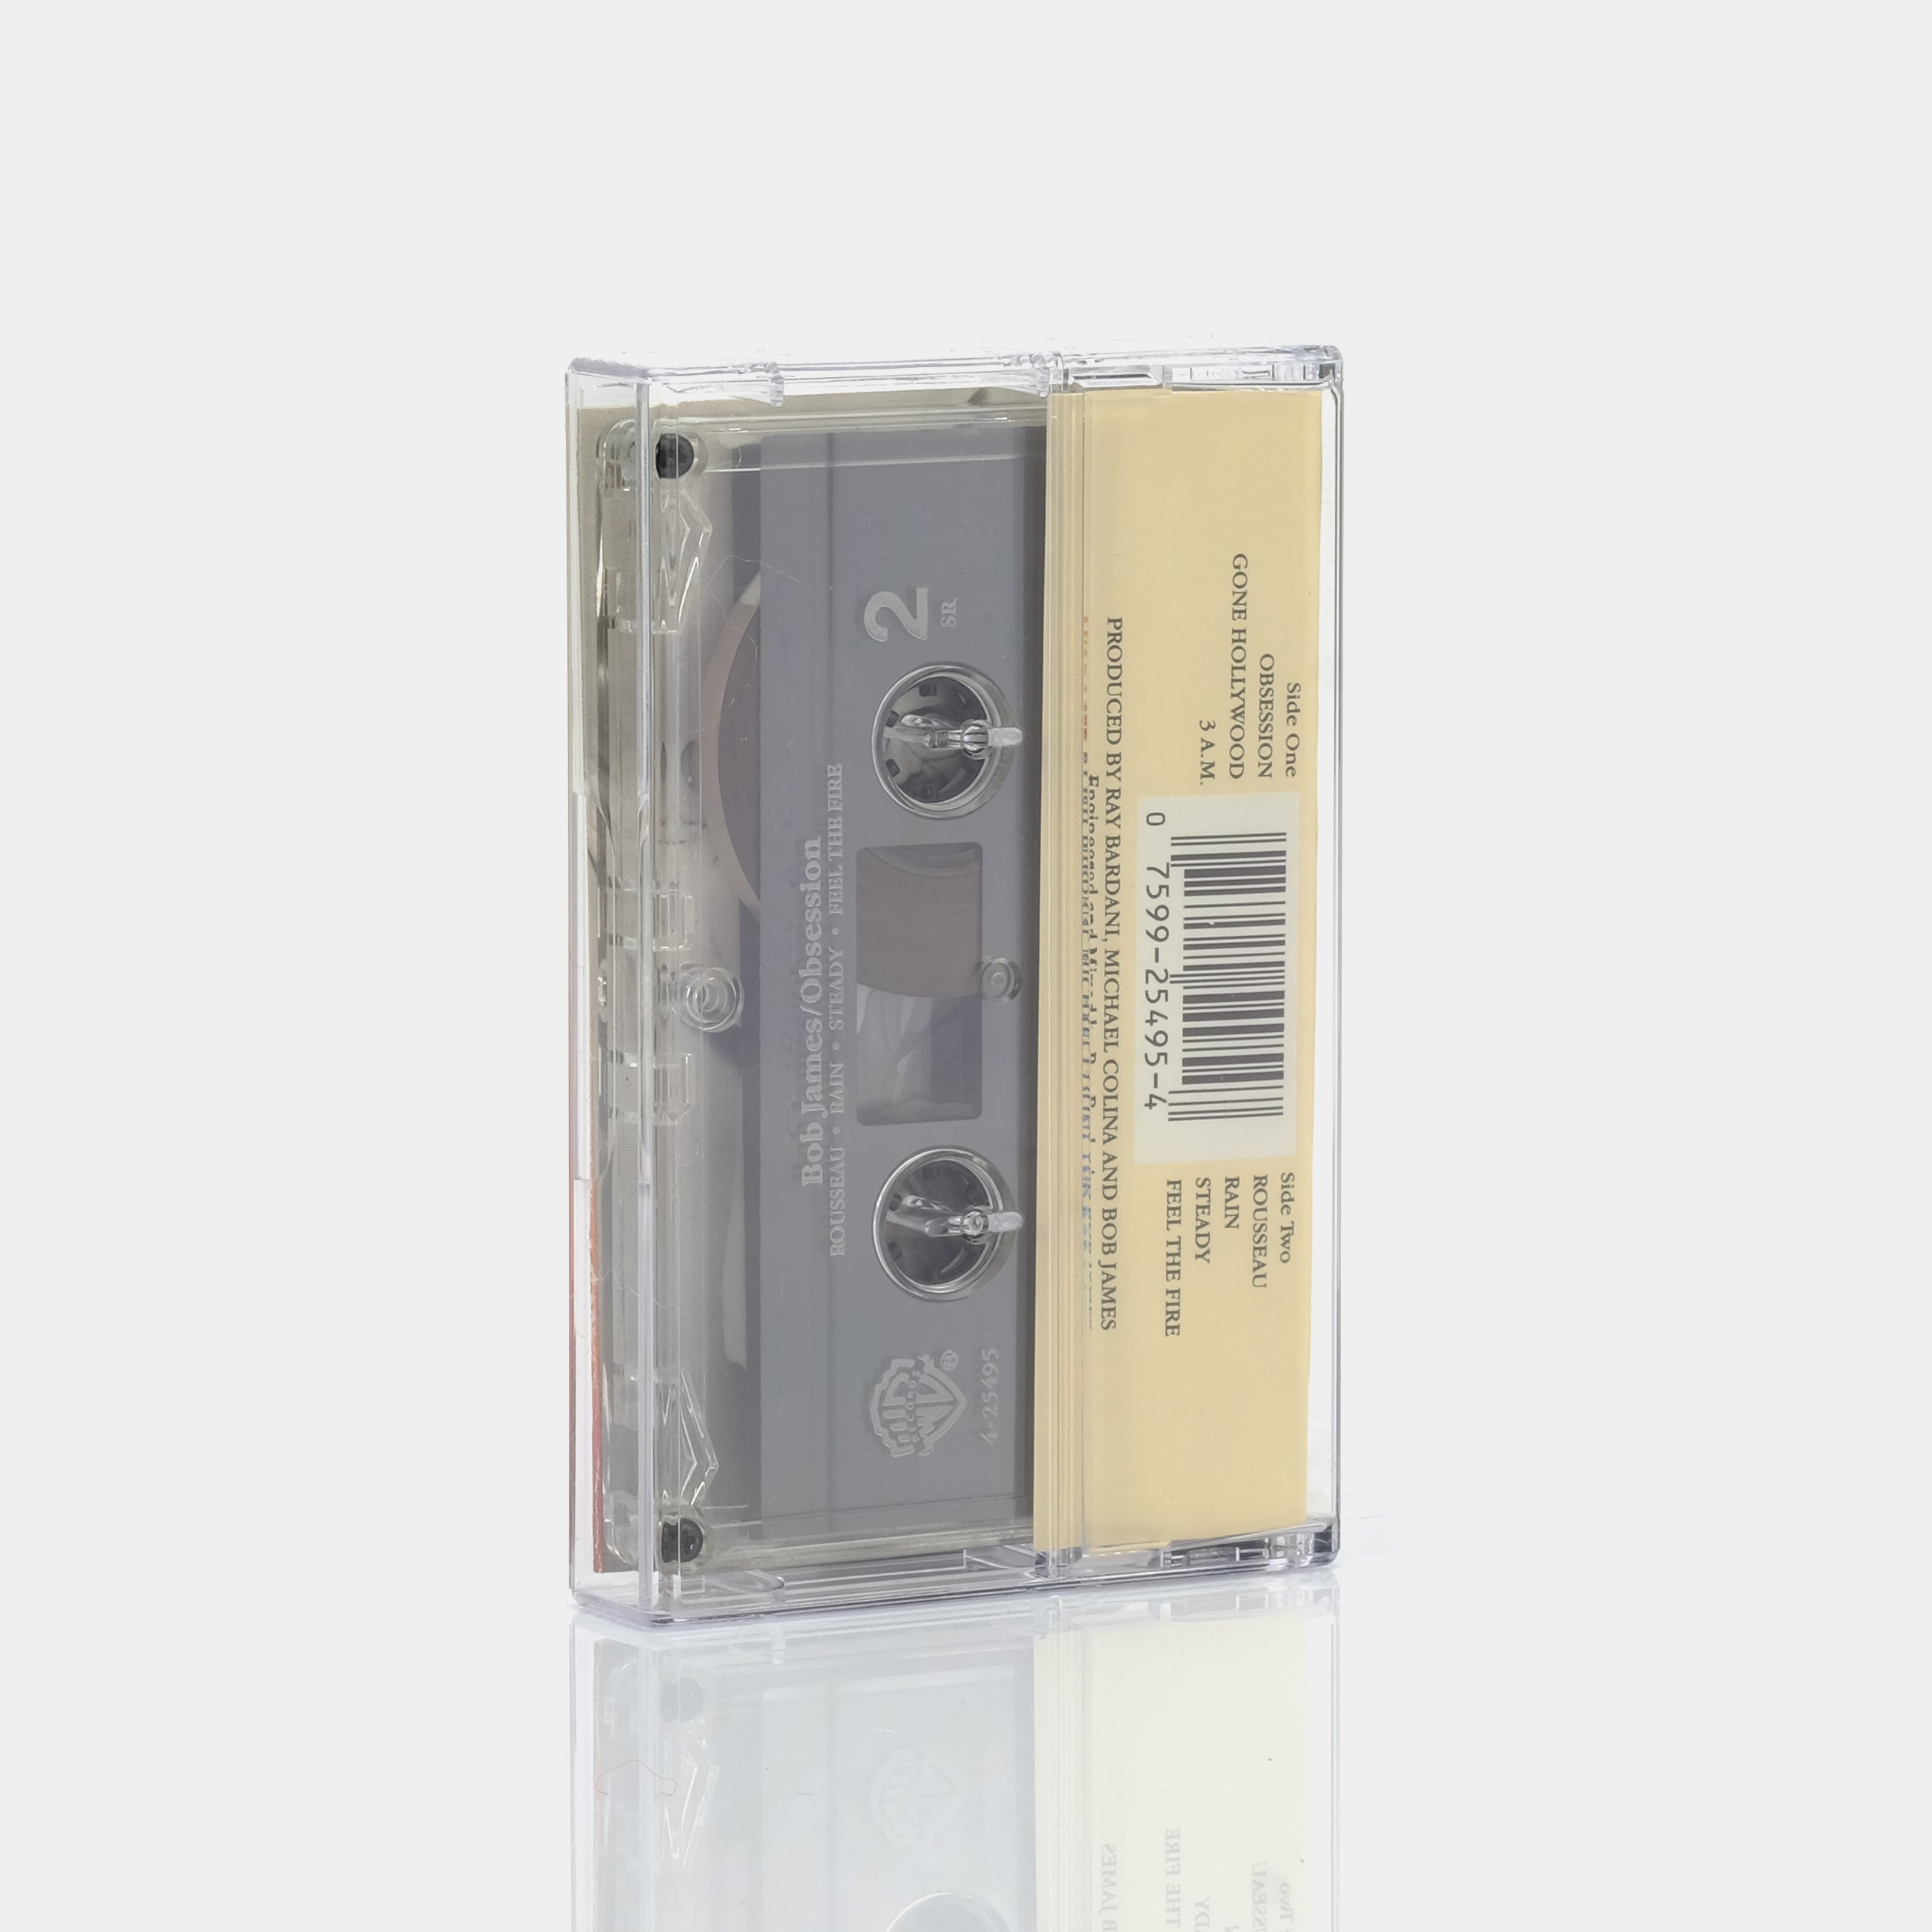 Bob James - Obsession Cassette Tape